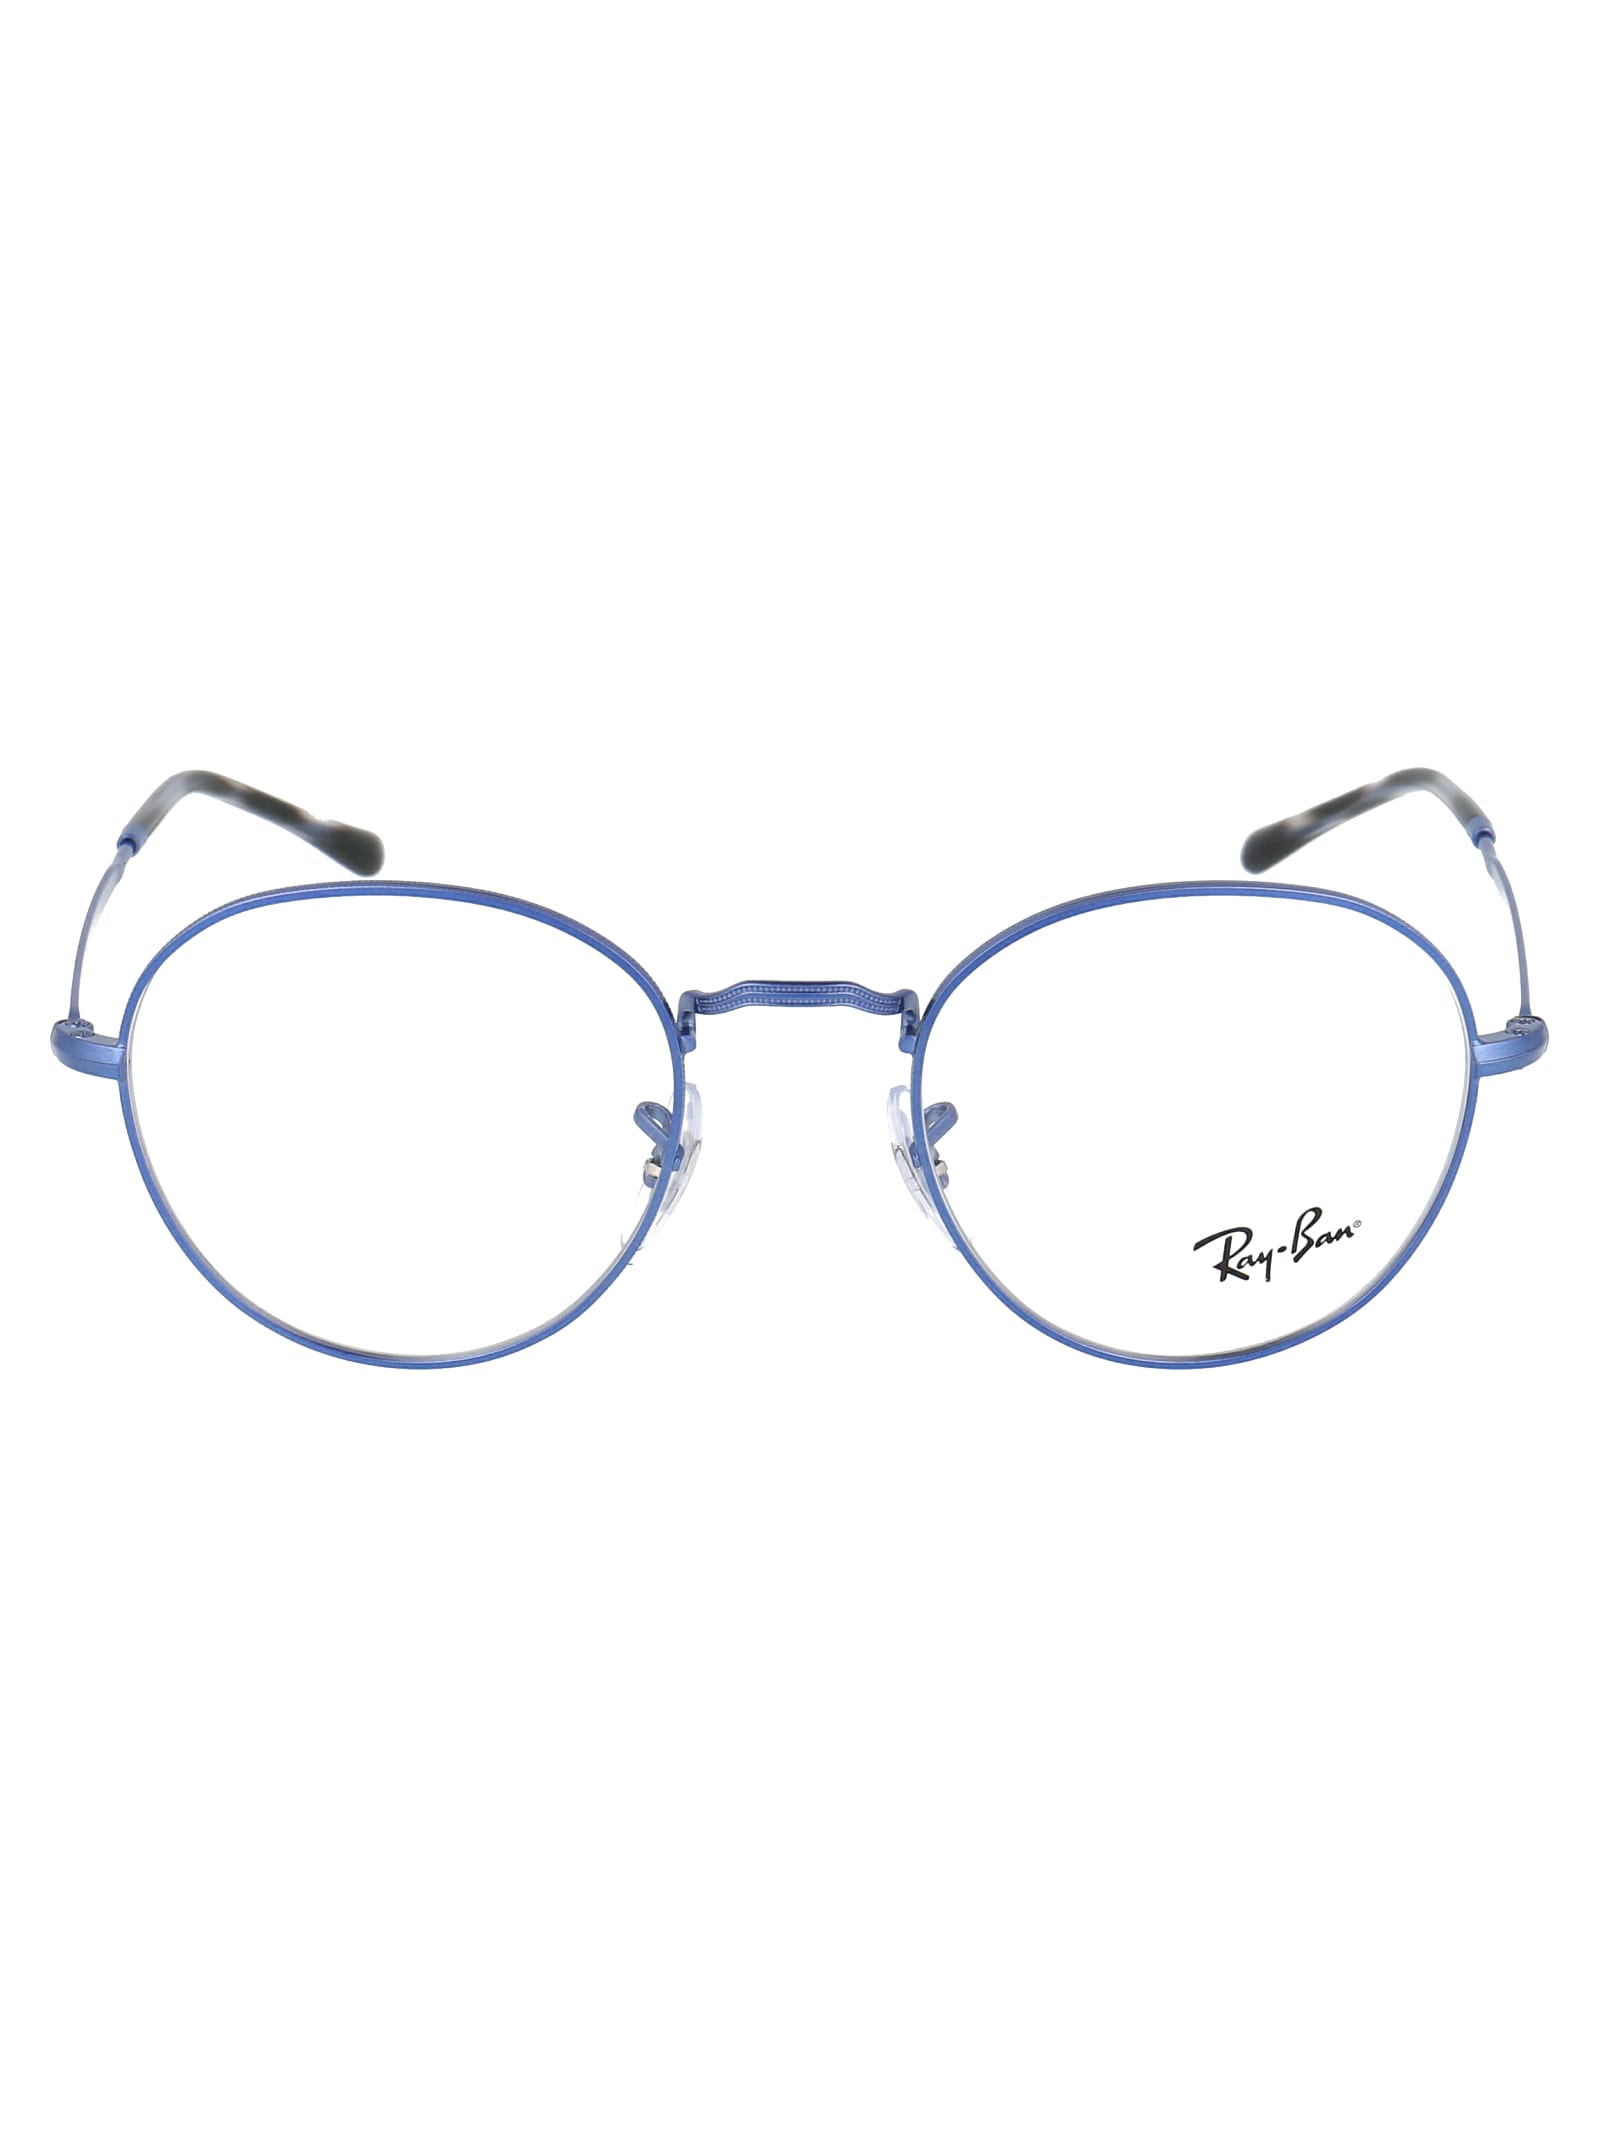 Ray Ban Round Metal Ii Glasses In 3071 Sand Trasparent Blu